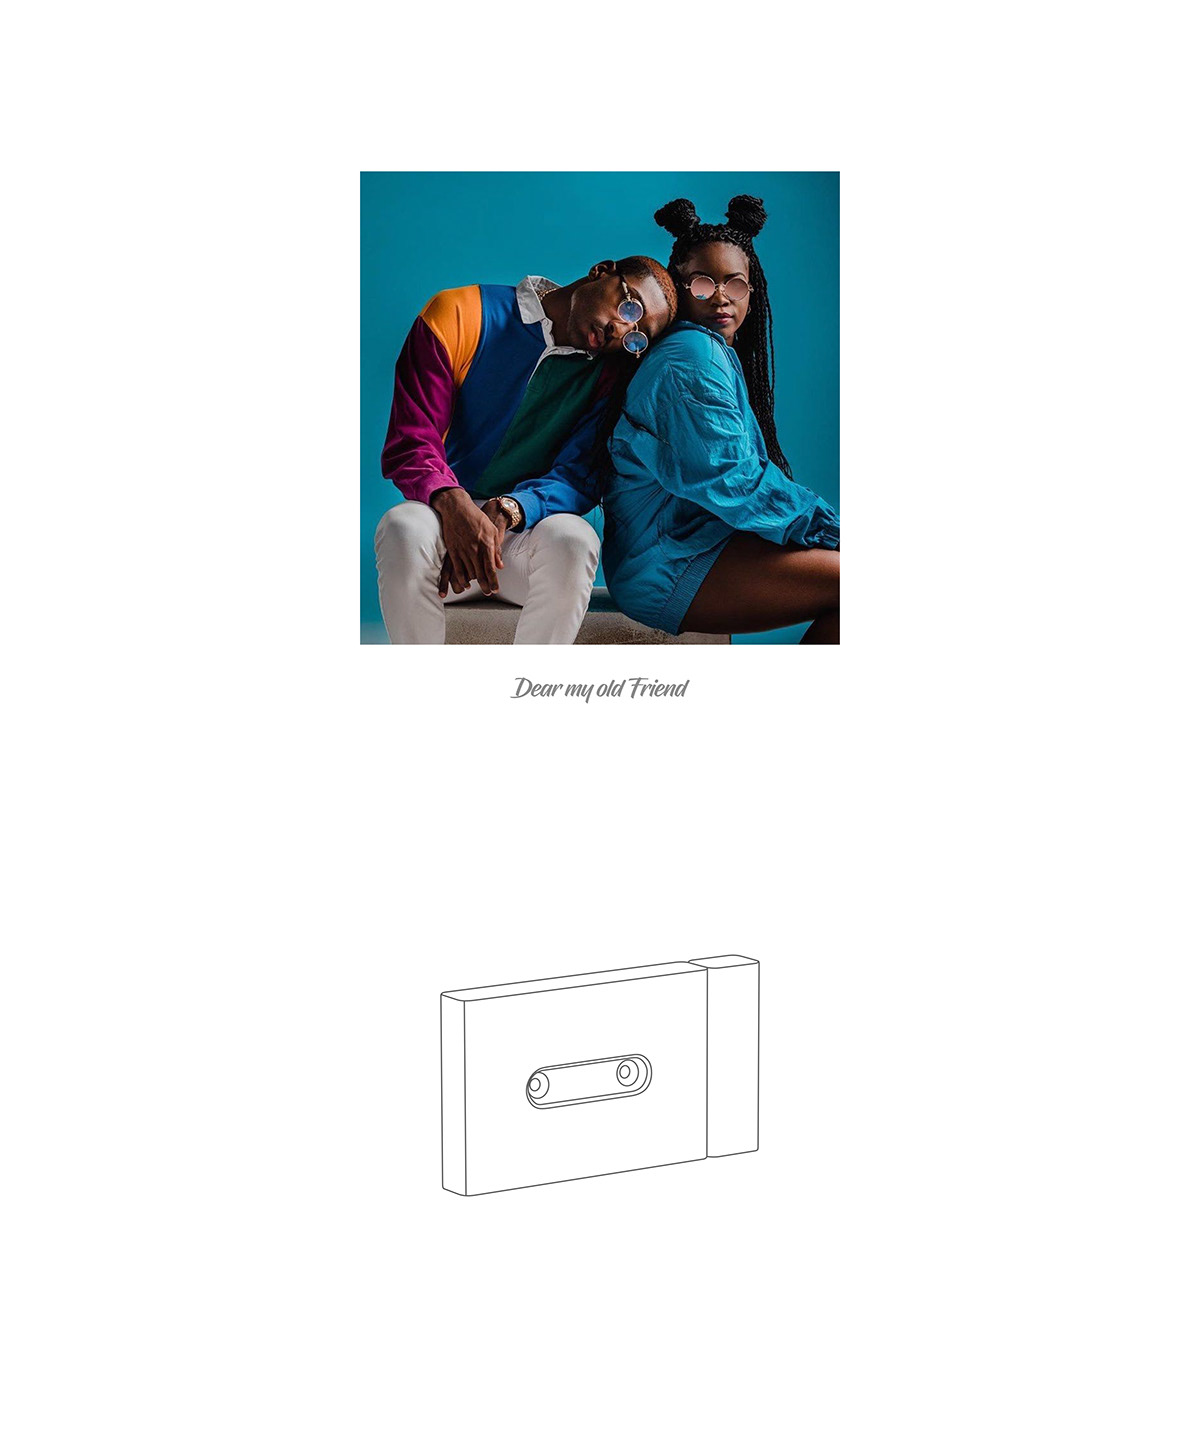 Adobe Portfolio cassette player Audio pal concept design inspired design trend earphone tape DAWN